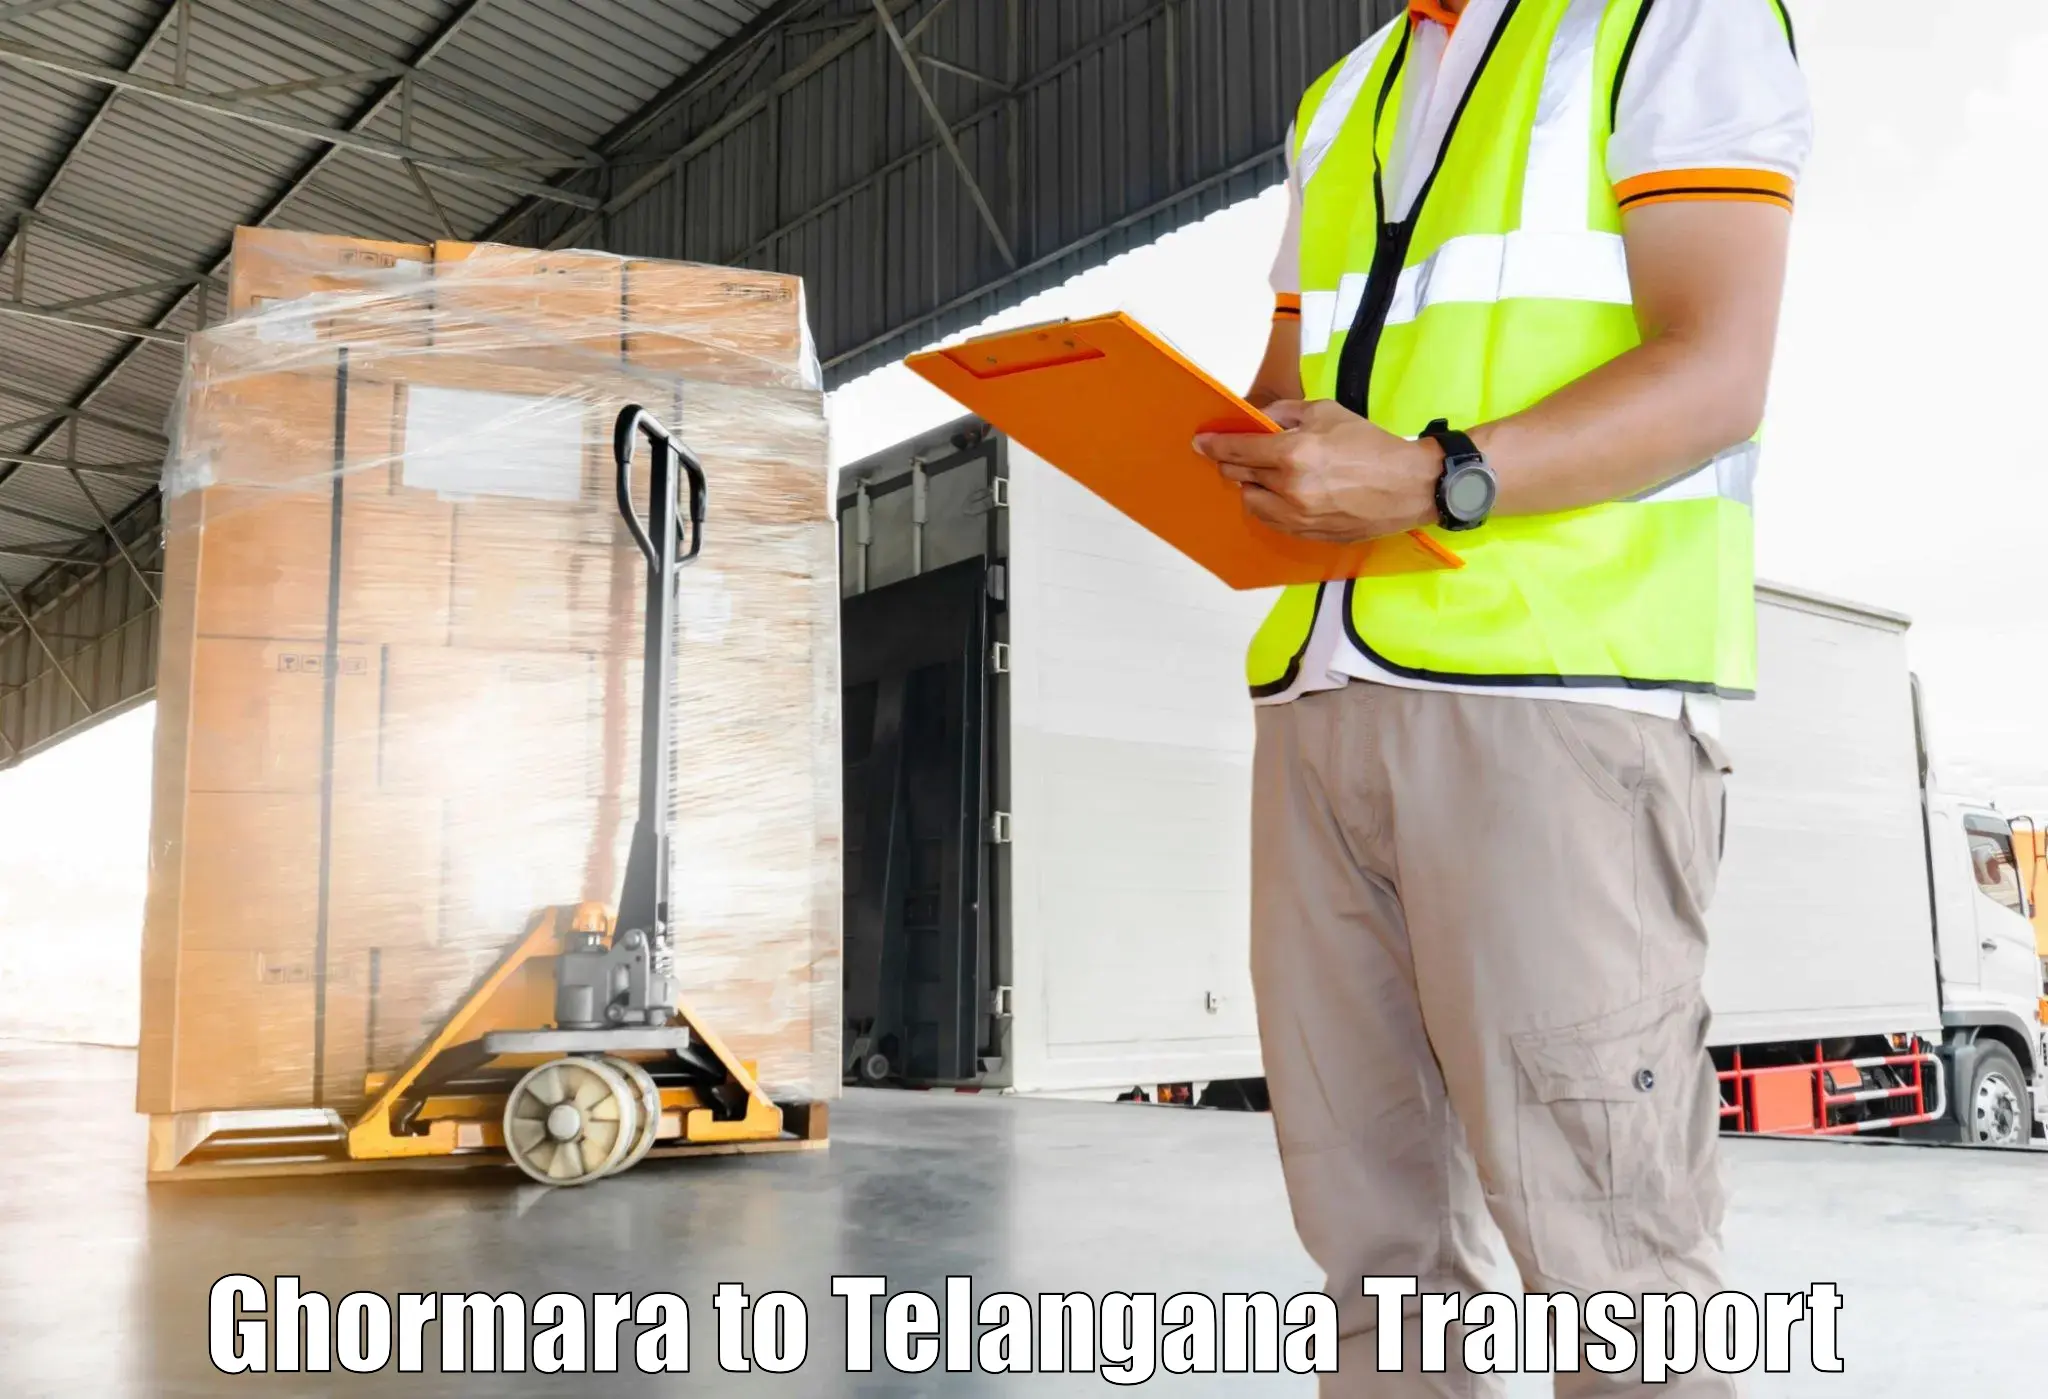 Truck transport companies in India Ghormara to Bhainsa